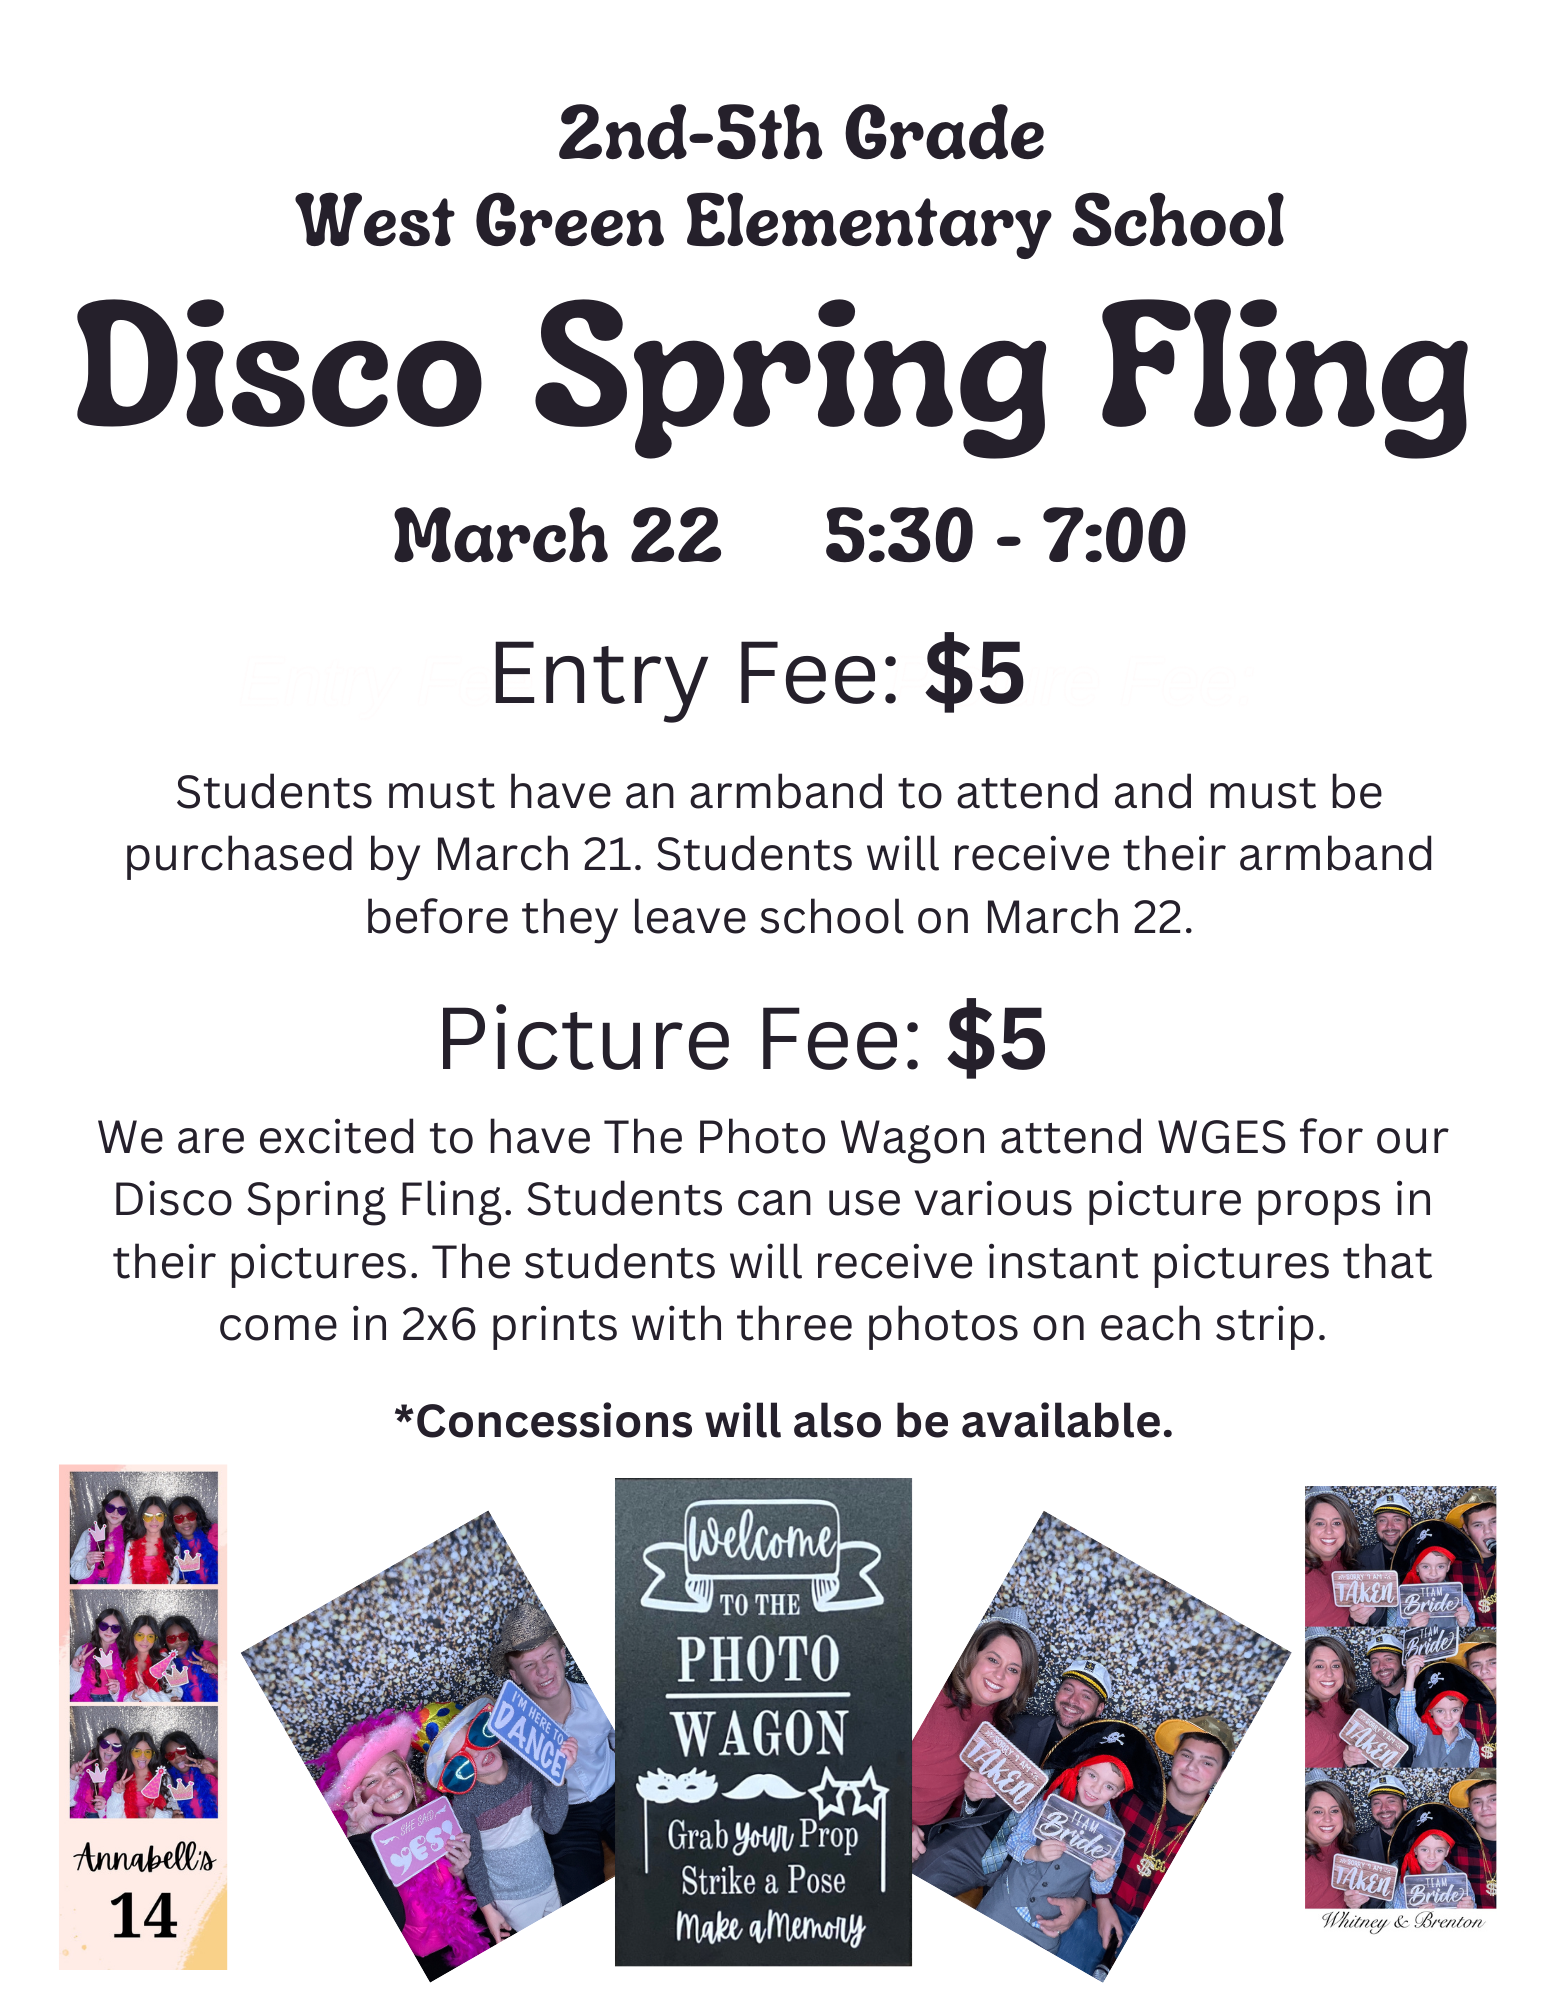 Disco Spring Fling Flyer (English)